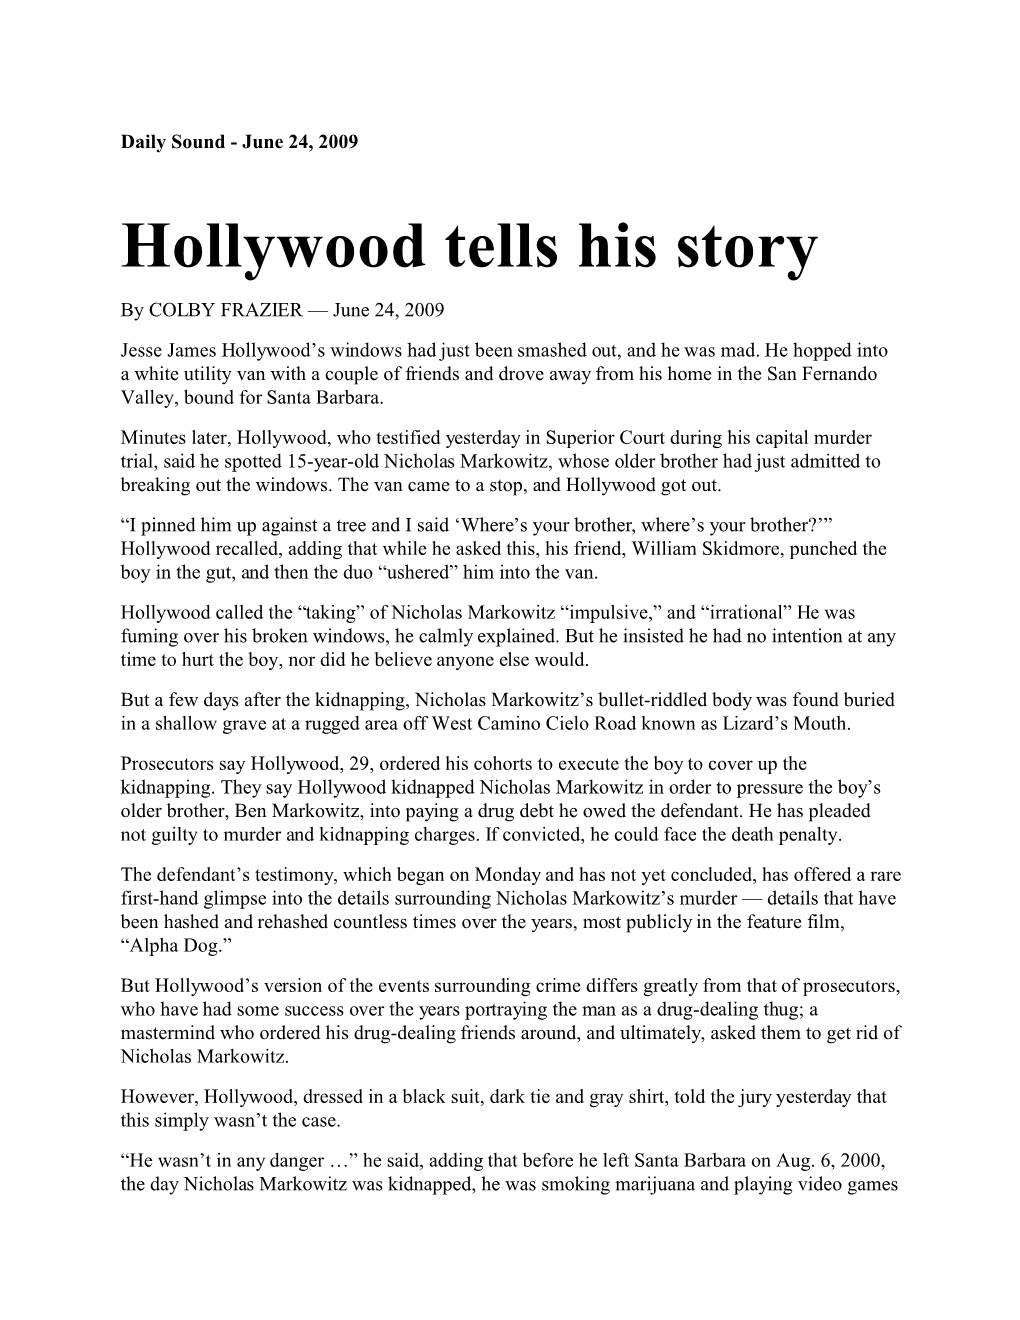 Hollywood Tells His Story